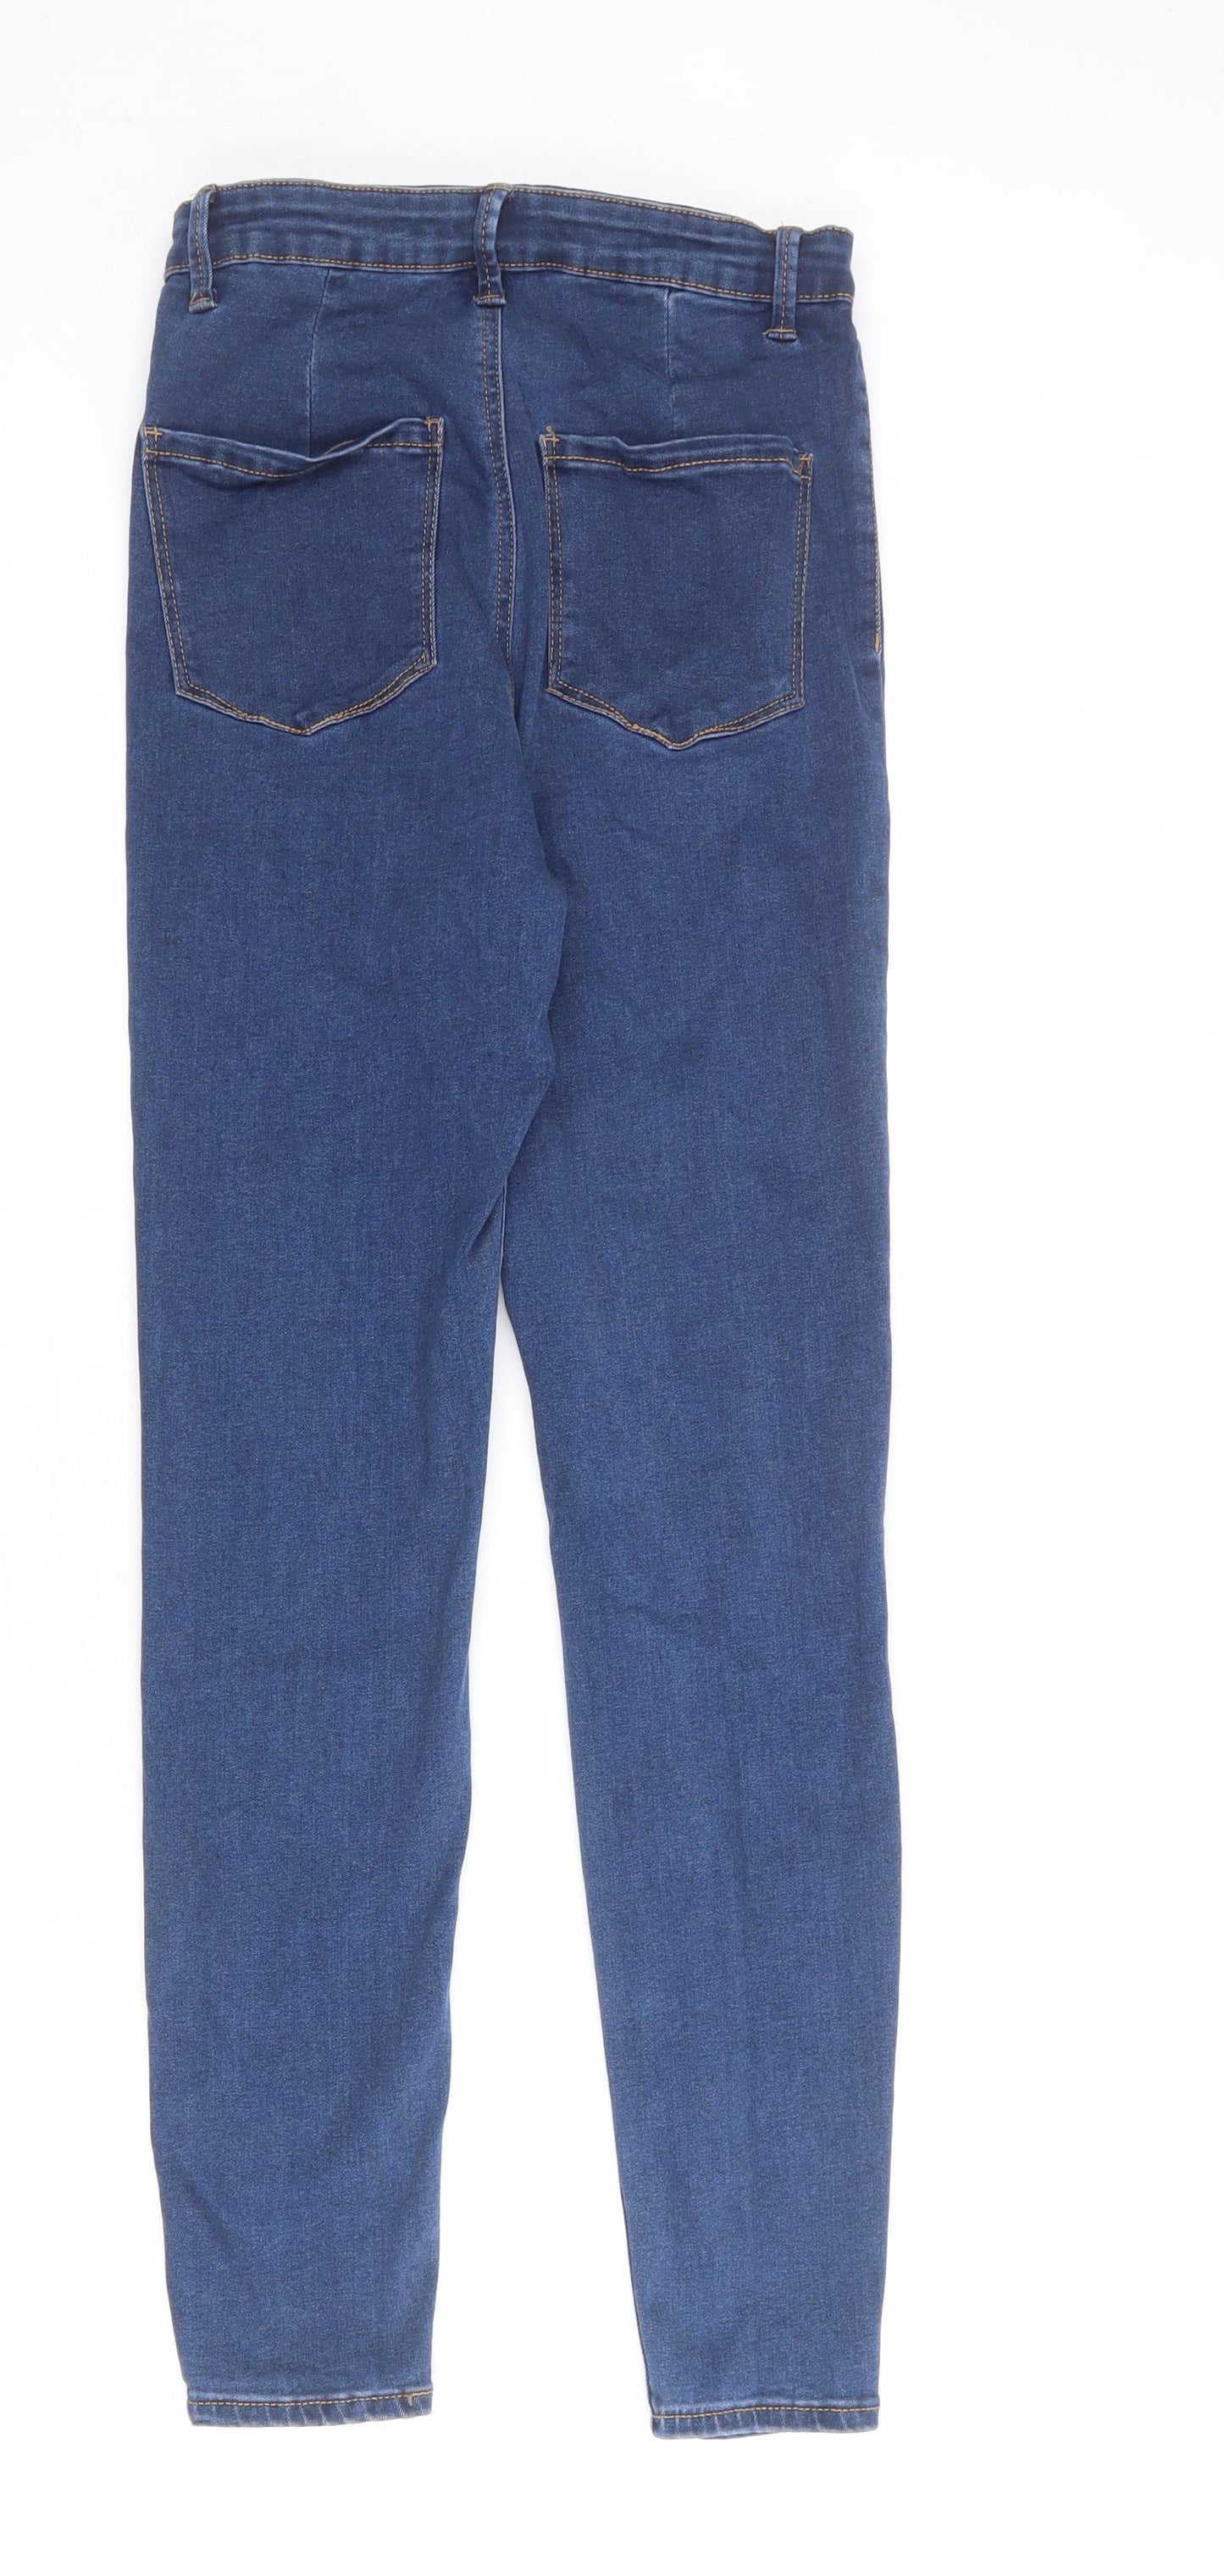 Denim & Co. Womens Blue Cotton Skinny Jeans Size 12 L28 in Regular Zip